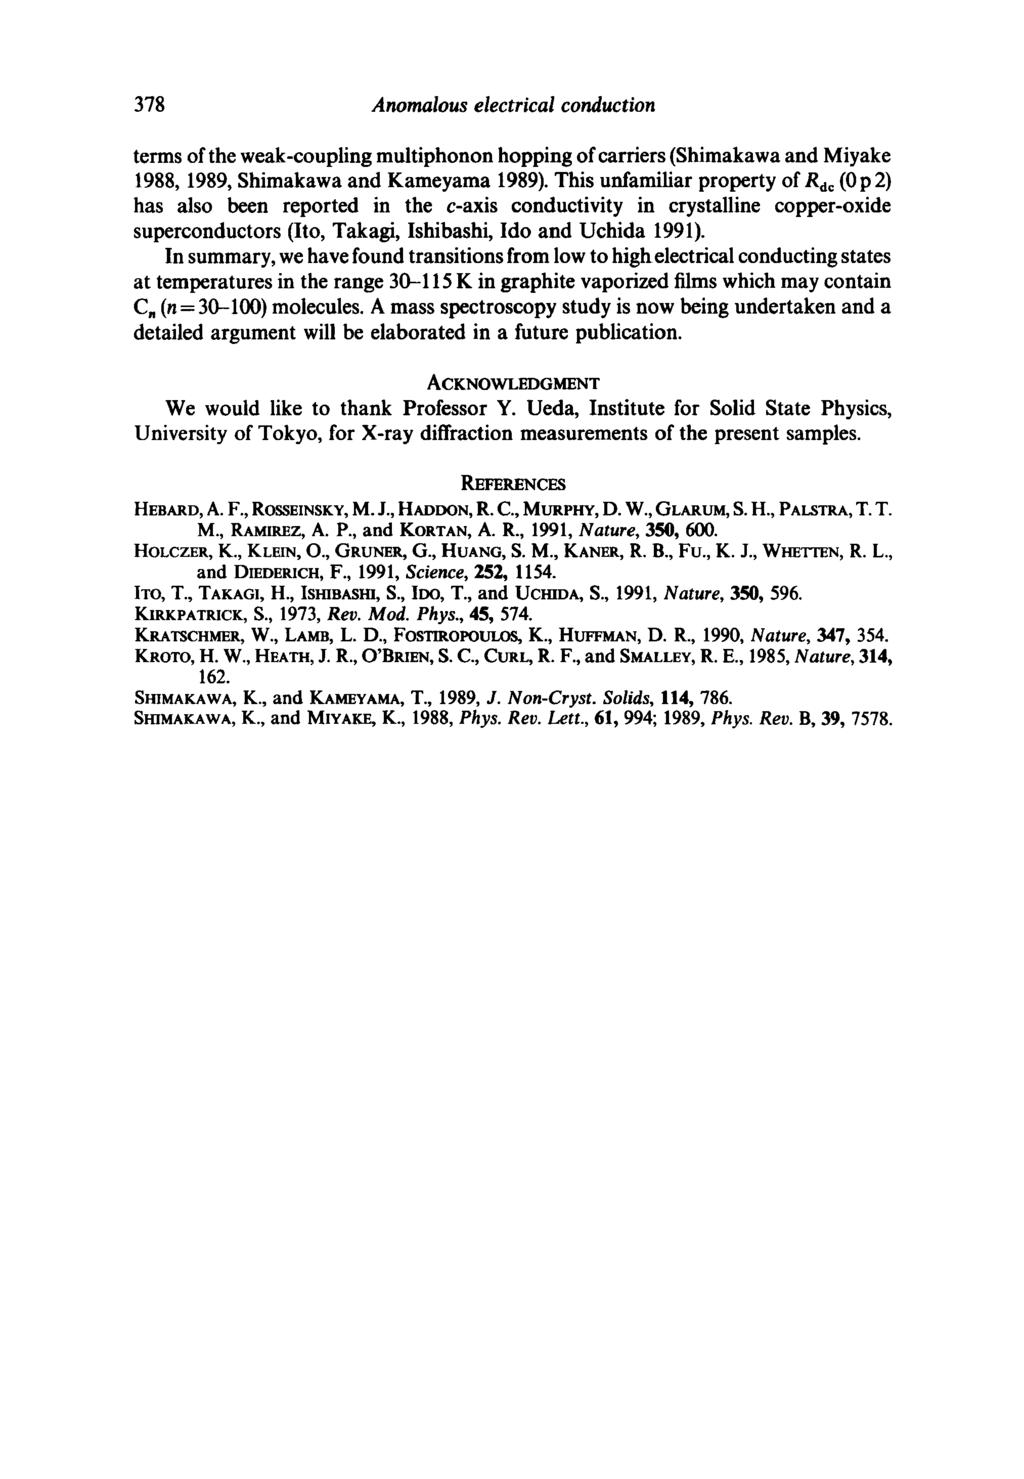 378 Anomalous electrical conduction terms of the weak-coupling multiphonon hopping of carriers (Shimakawa and Miyake 1988,1989, Shimakawa and Kameyama 1989).